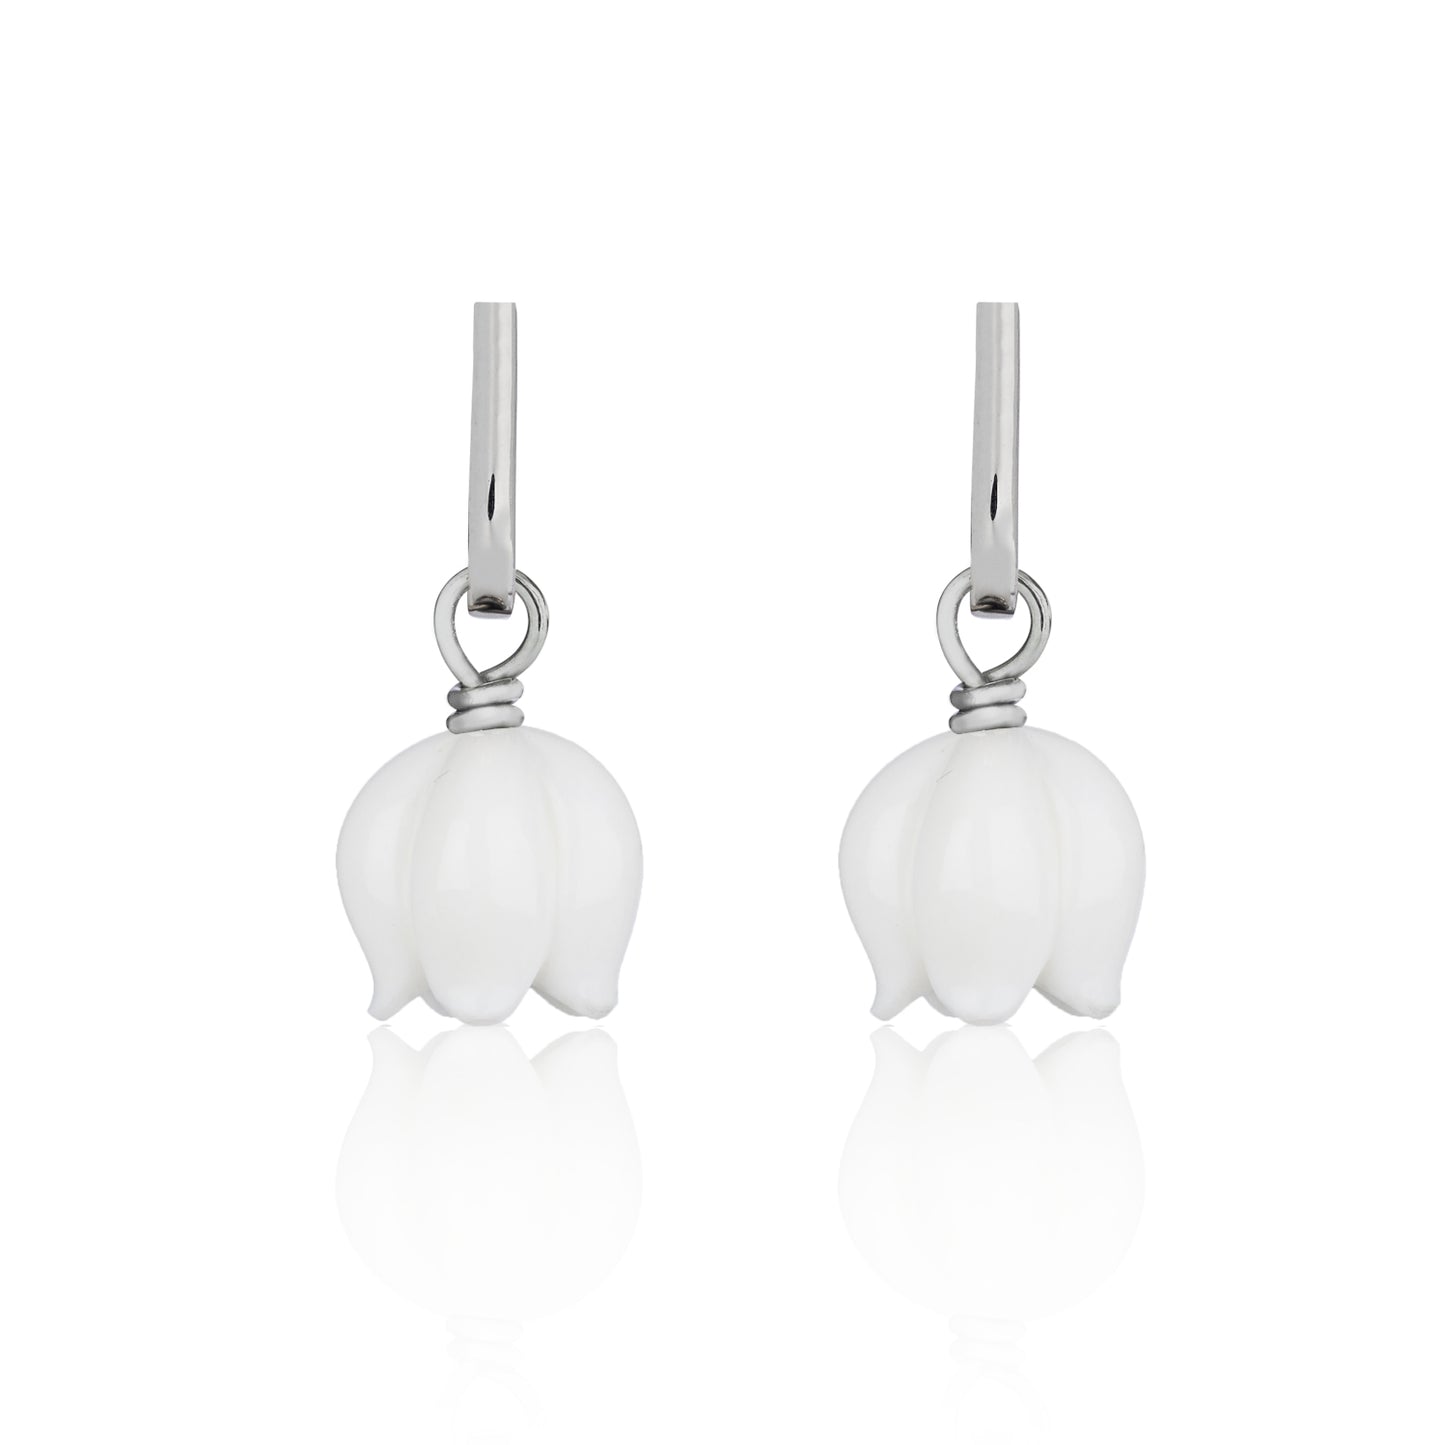 White Gold and White Opal Bellflower Loop Earrings by McFarlane Fine Jewellery